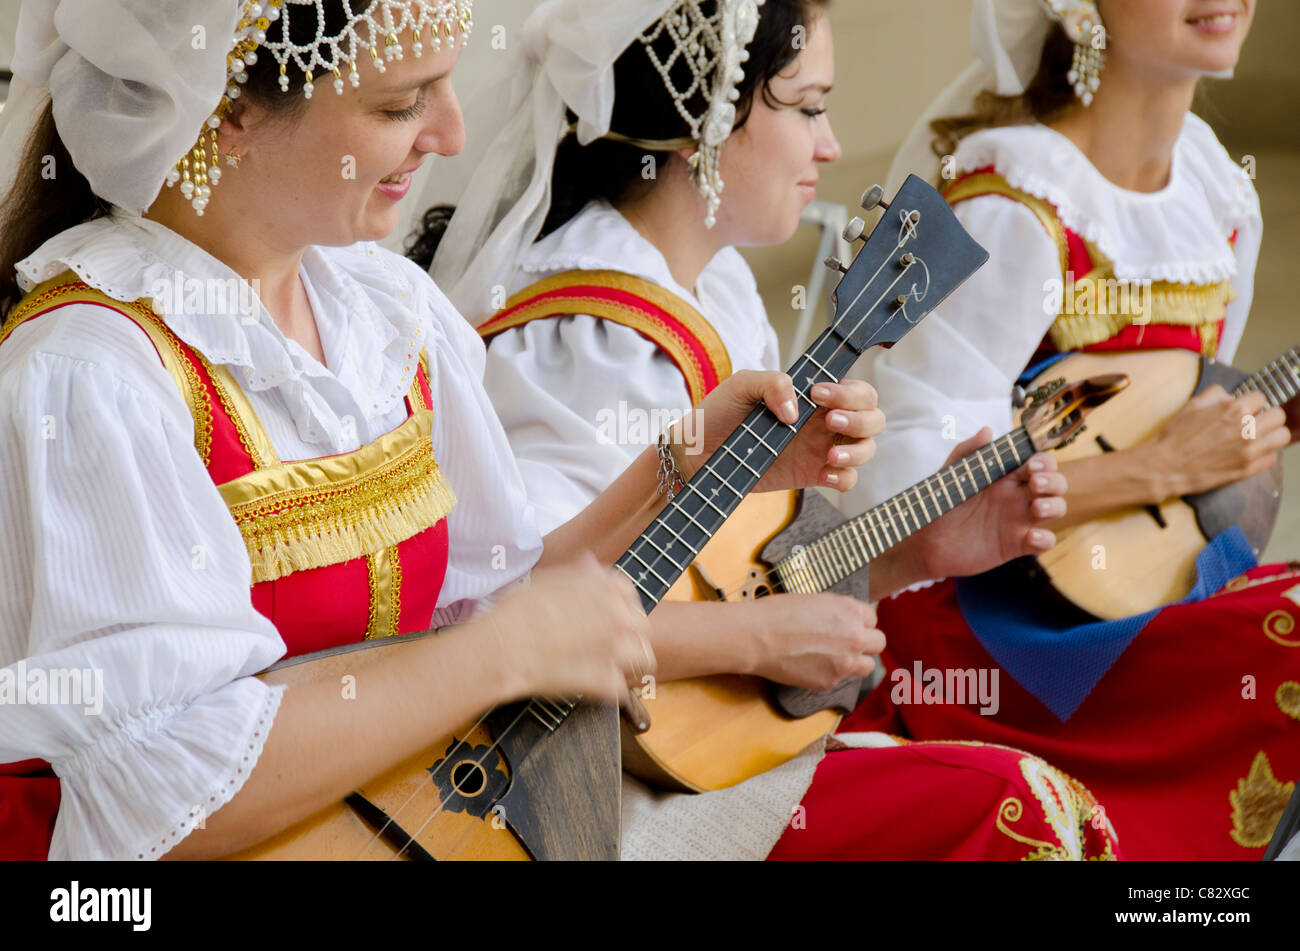 Ukraine, Yalta, Livadia Palace. Ukrainian folkloric show. Women in traditional costumes playing Russian balalaikas and lutes. Stock Photo